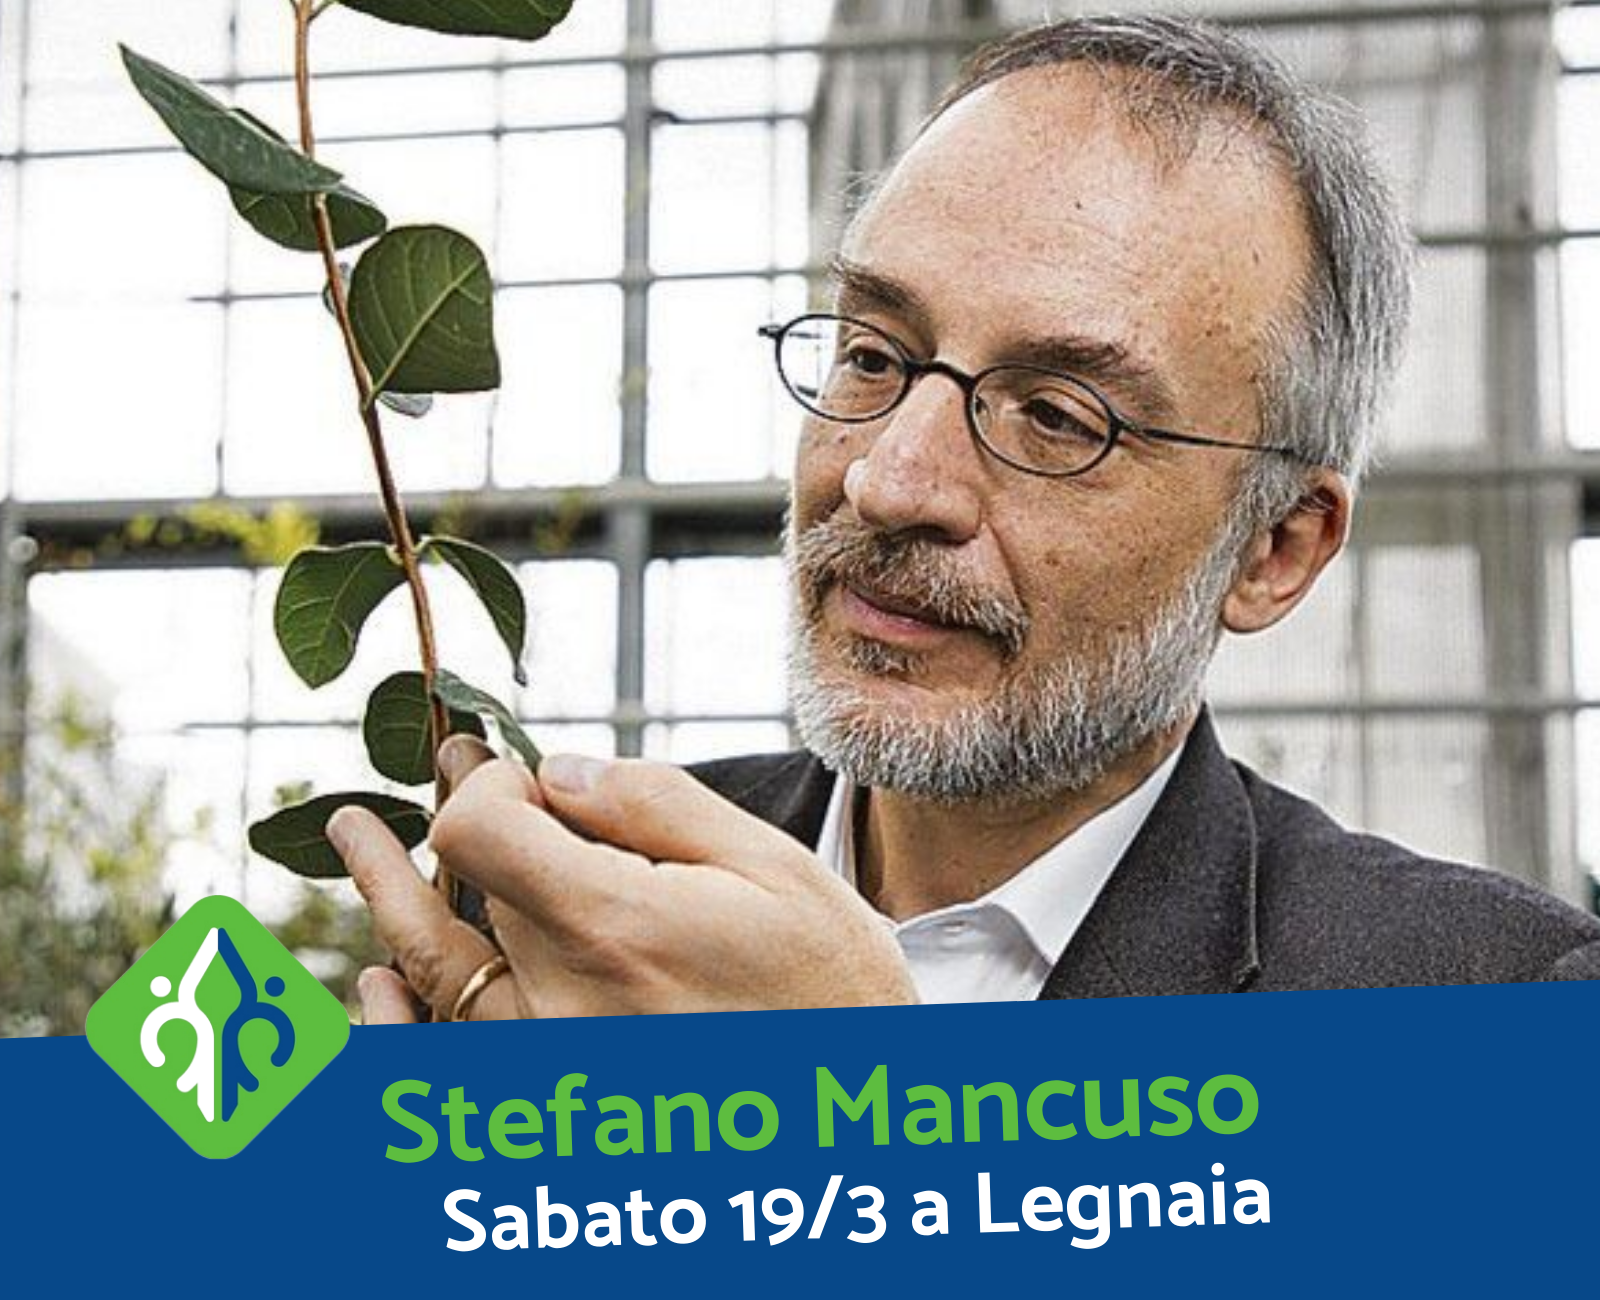 Stefano Mancuso a Legnaia, parliamo di Green City